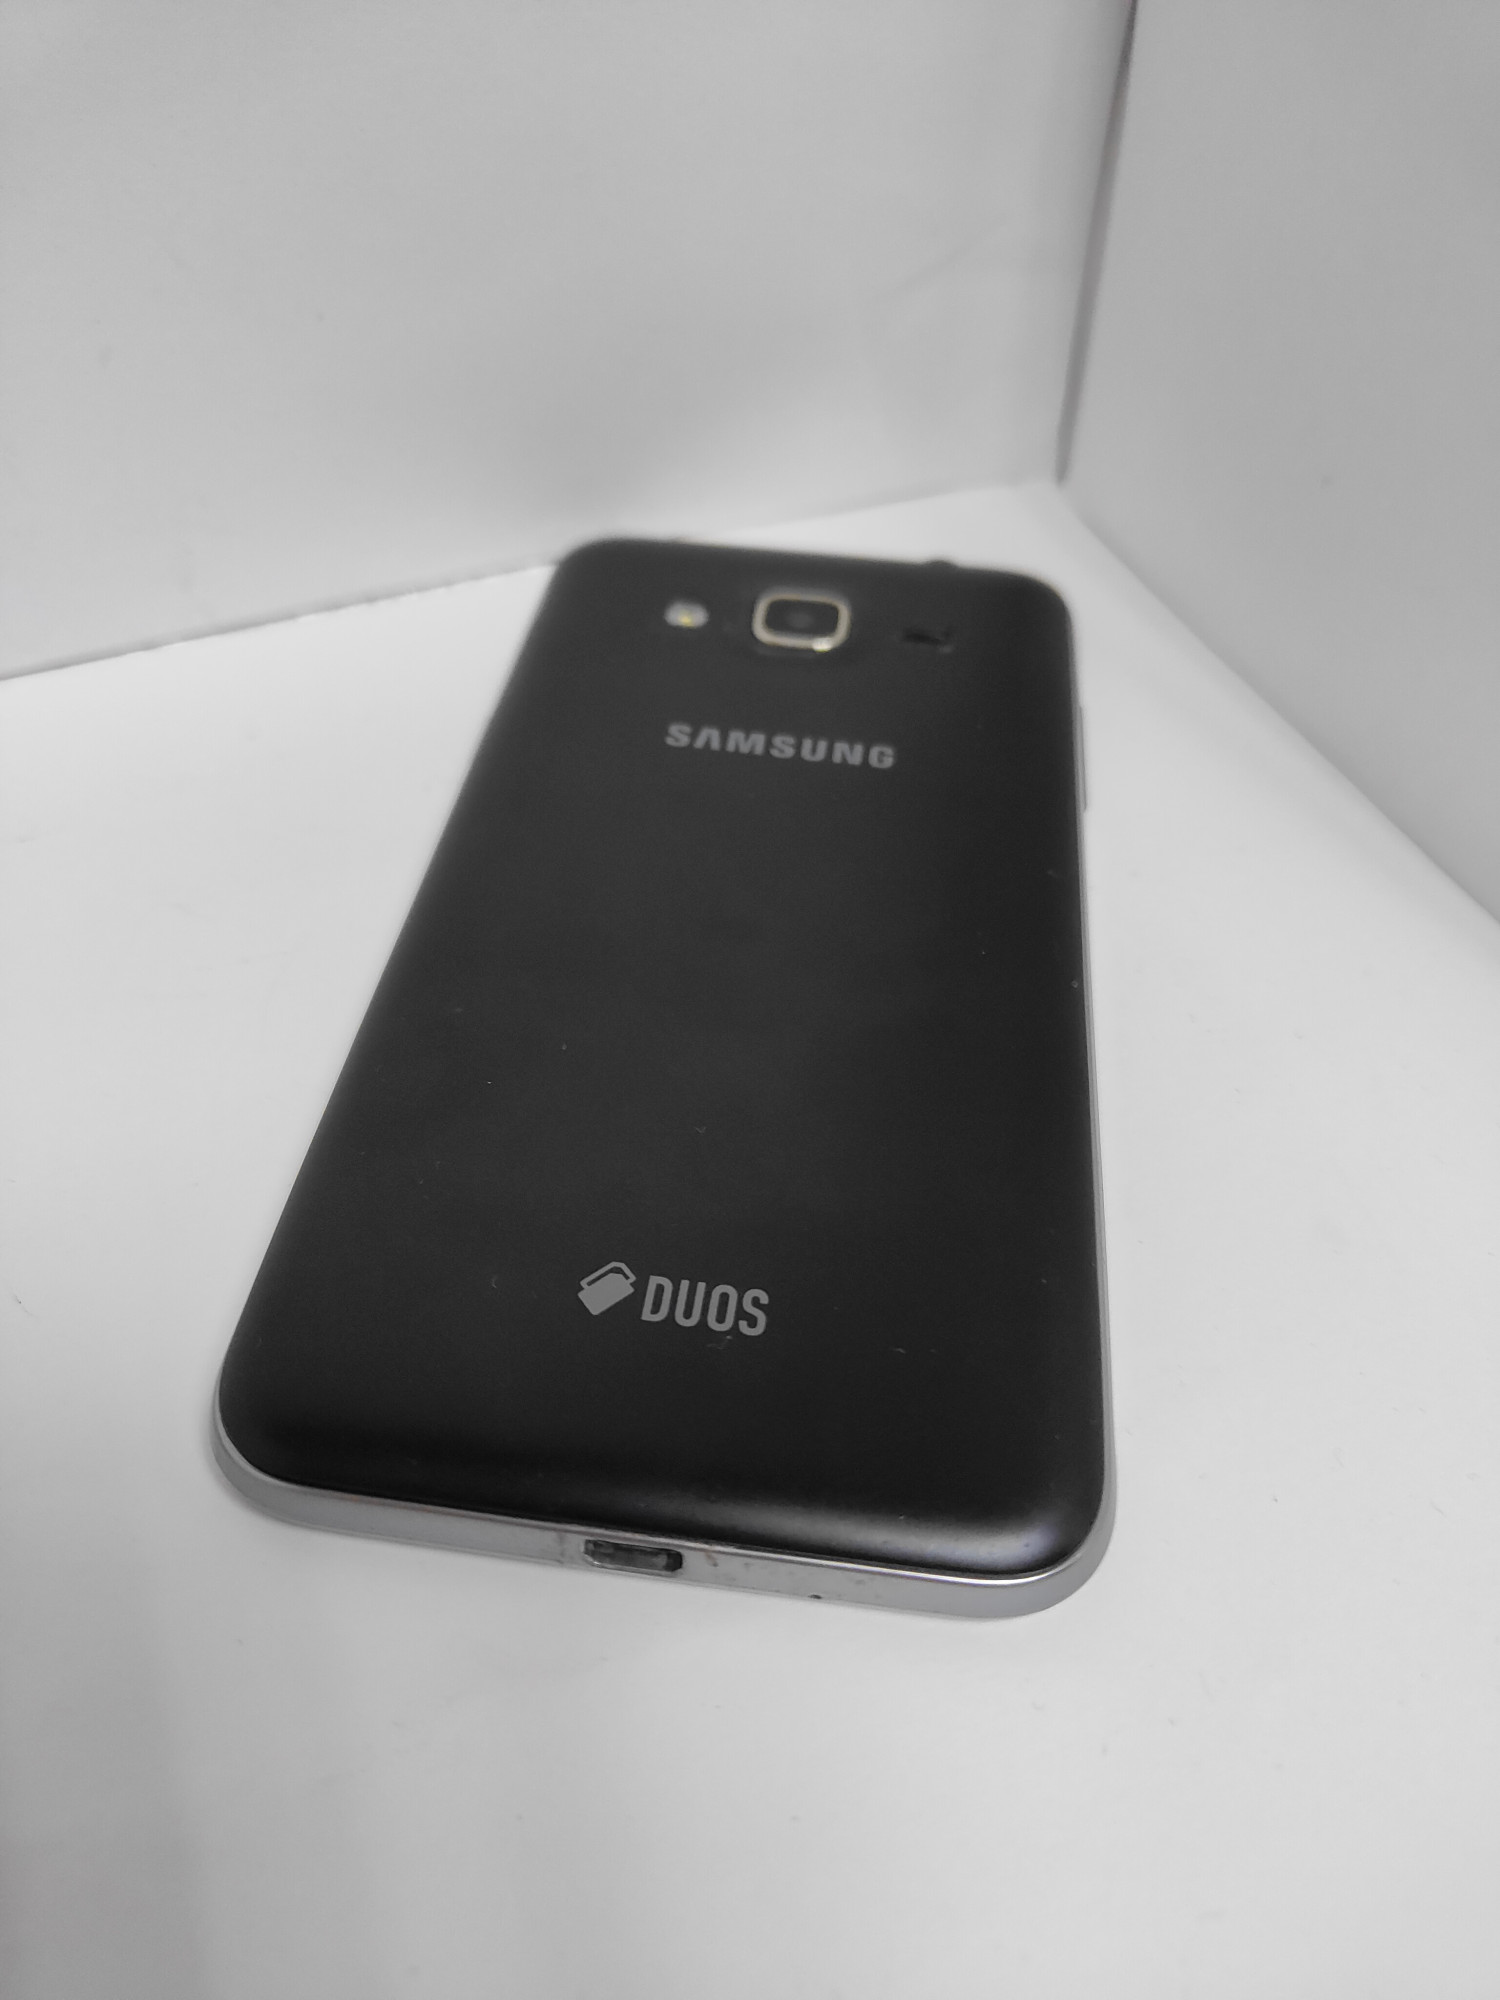 Samsung Galaxy J3 2016 Black (SM-J320HZKD) 1/8Gb  1